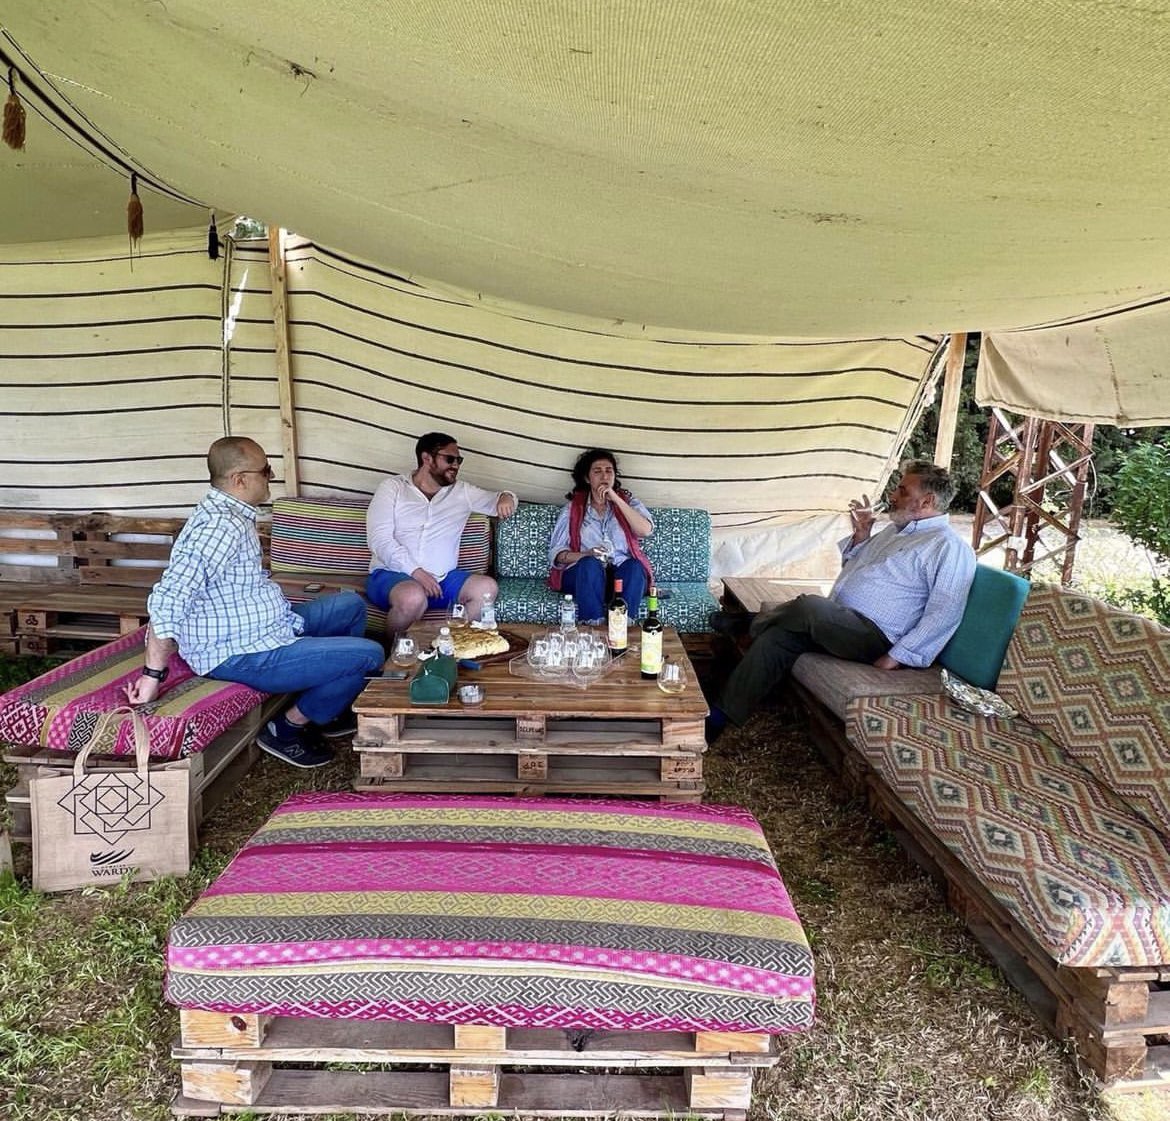 Chillin’ in our newly erected tent with Mounia, Maxime and a couple of whites @mouniakik . #wine #whitewine #winetasting #chilling #tent #summer #summervenue #sustainable #veganwine #lebanesewine #lebanesewineries #winesoflebanon #awardwinningwines #lebanon #familybusiness